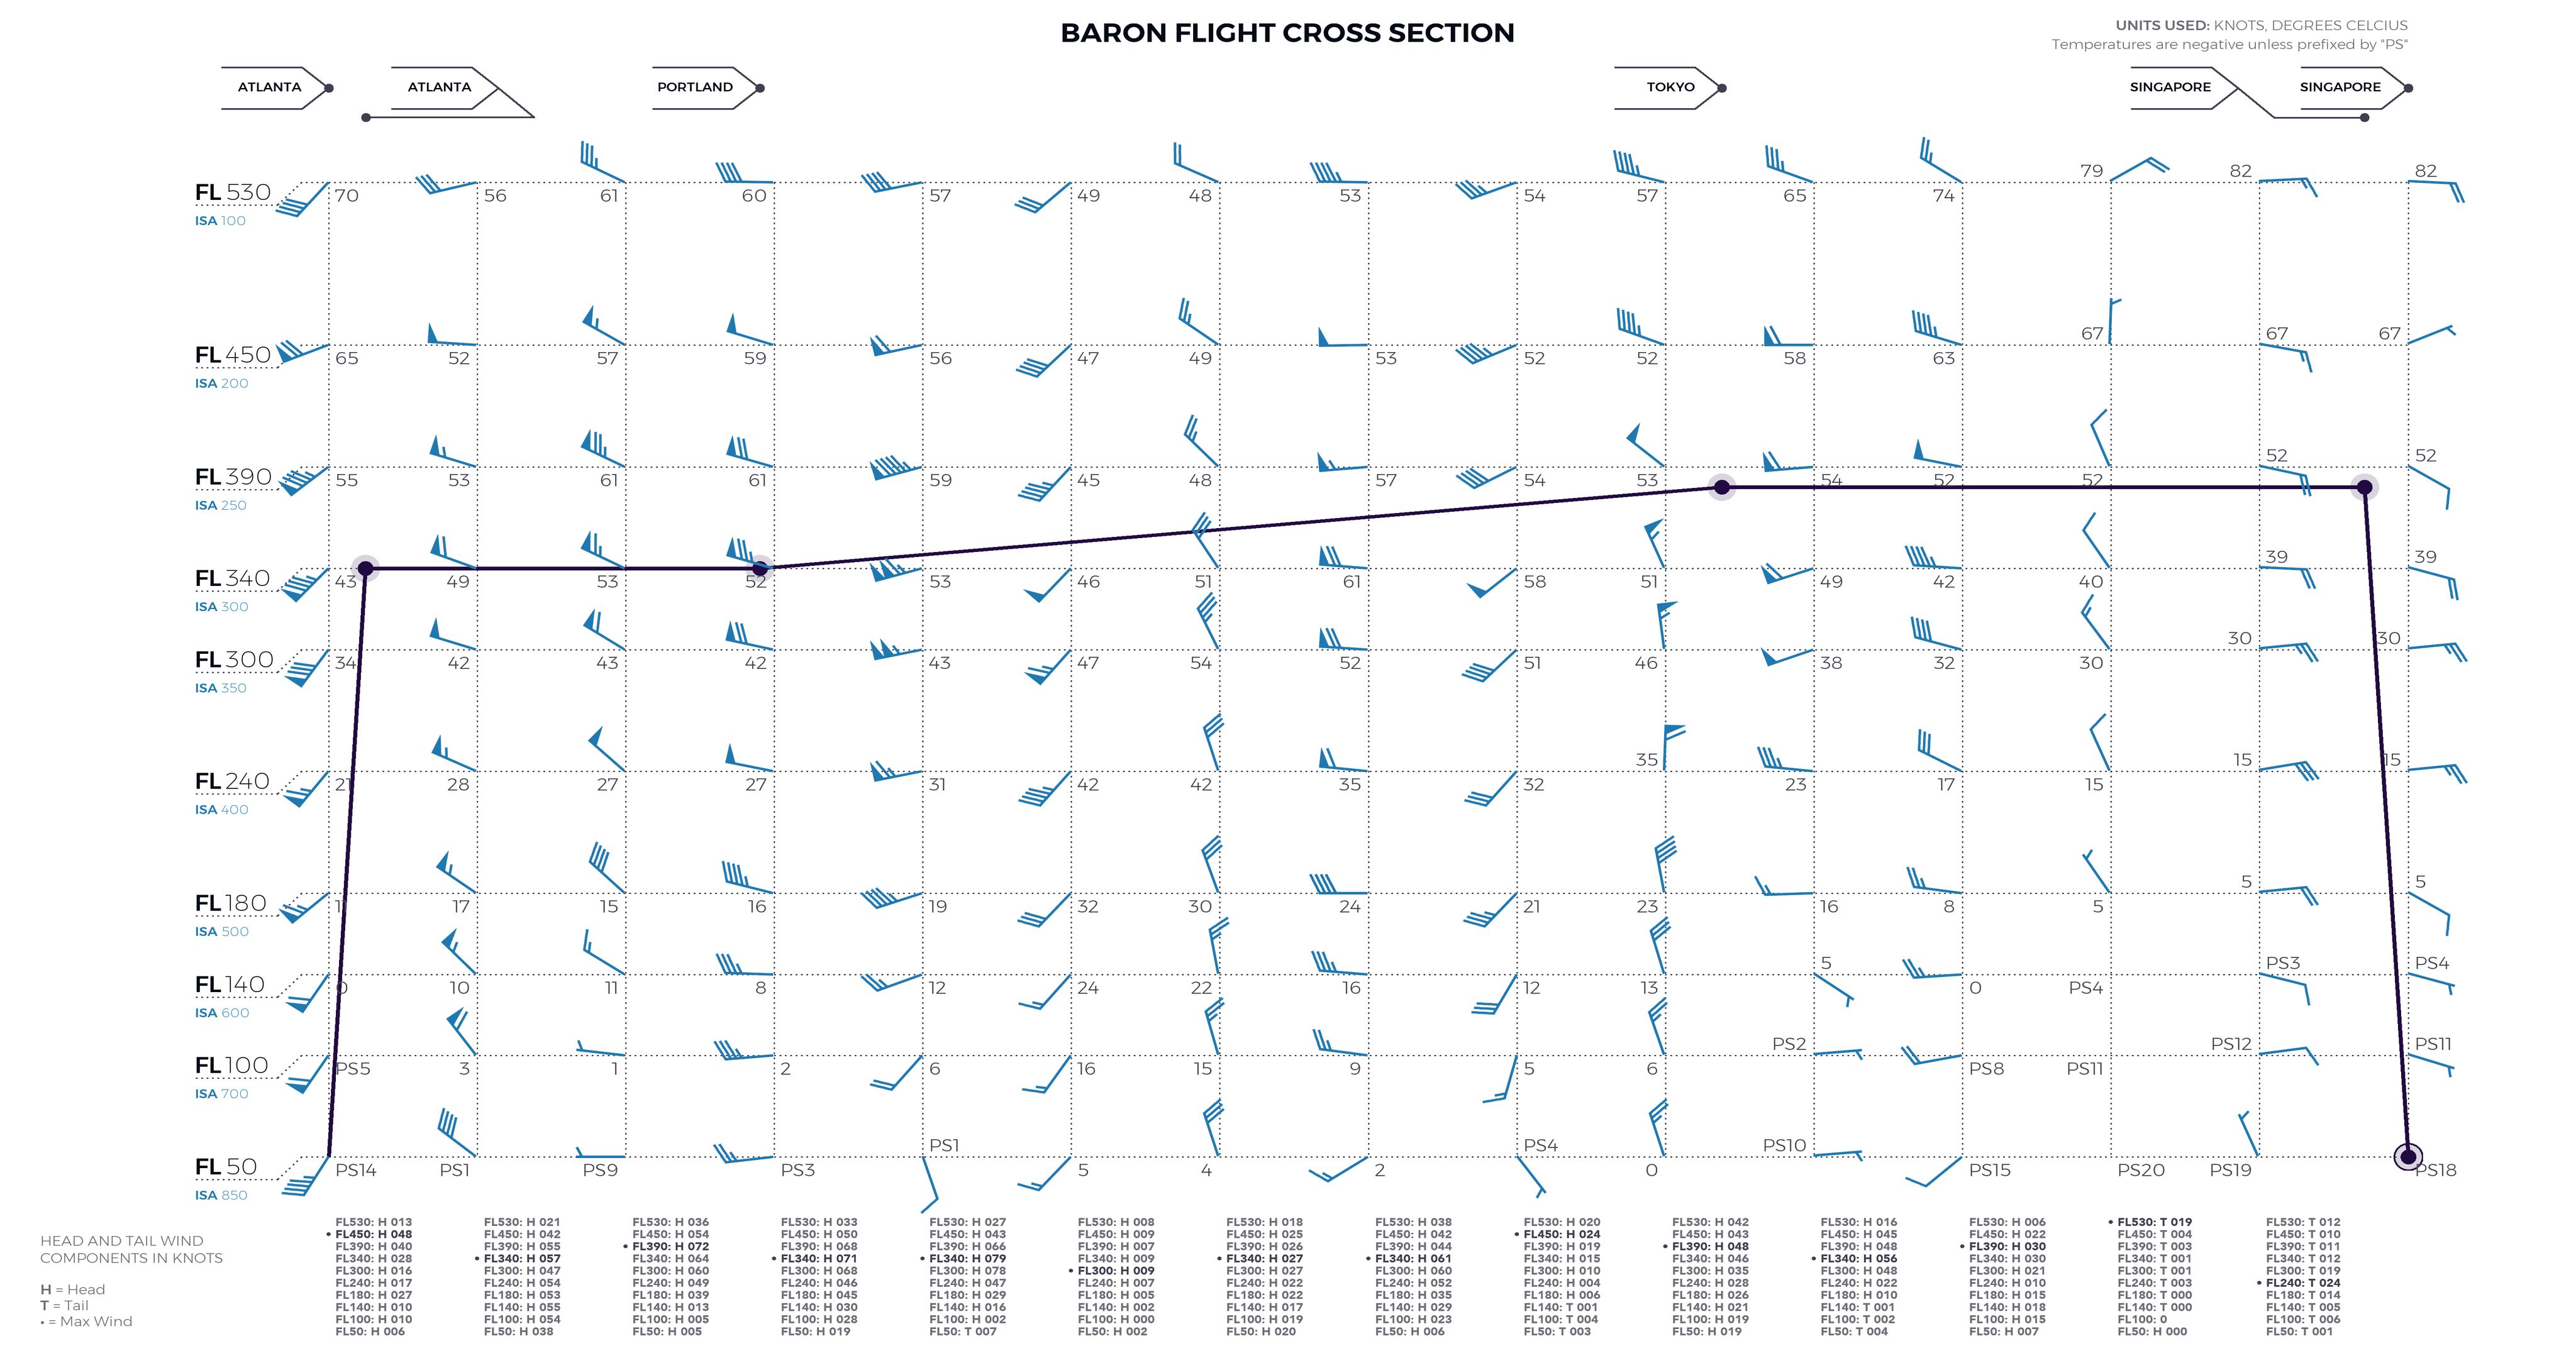 Screenshot of Baron's cross section flight data as displayed through the API.